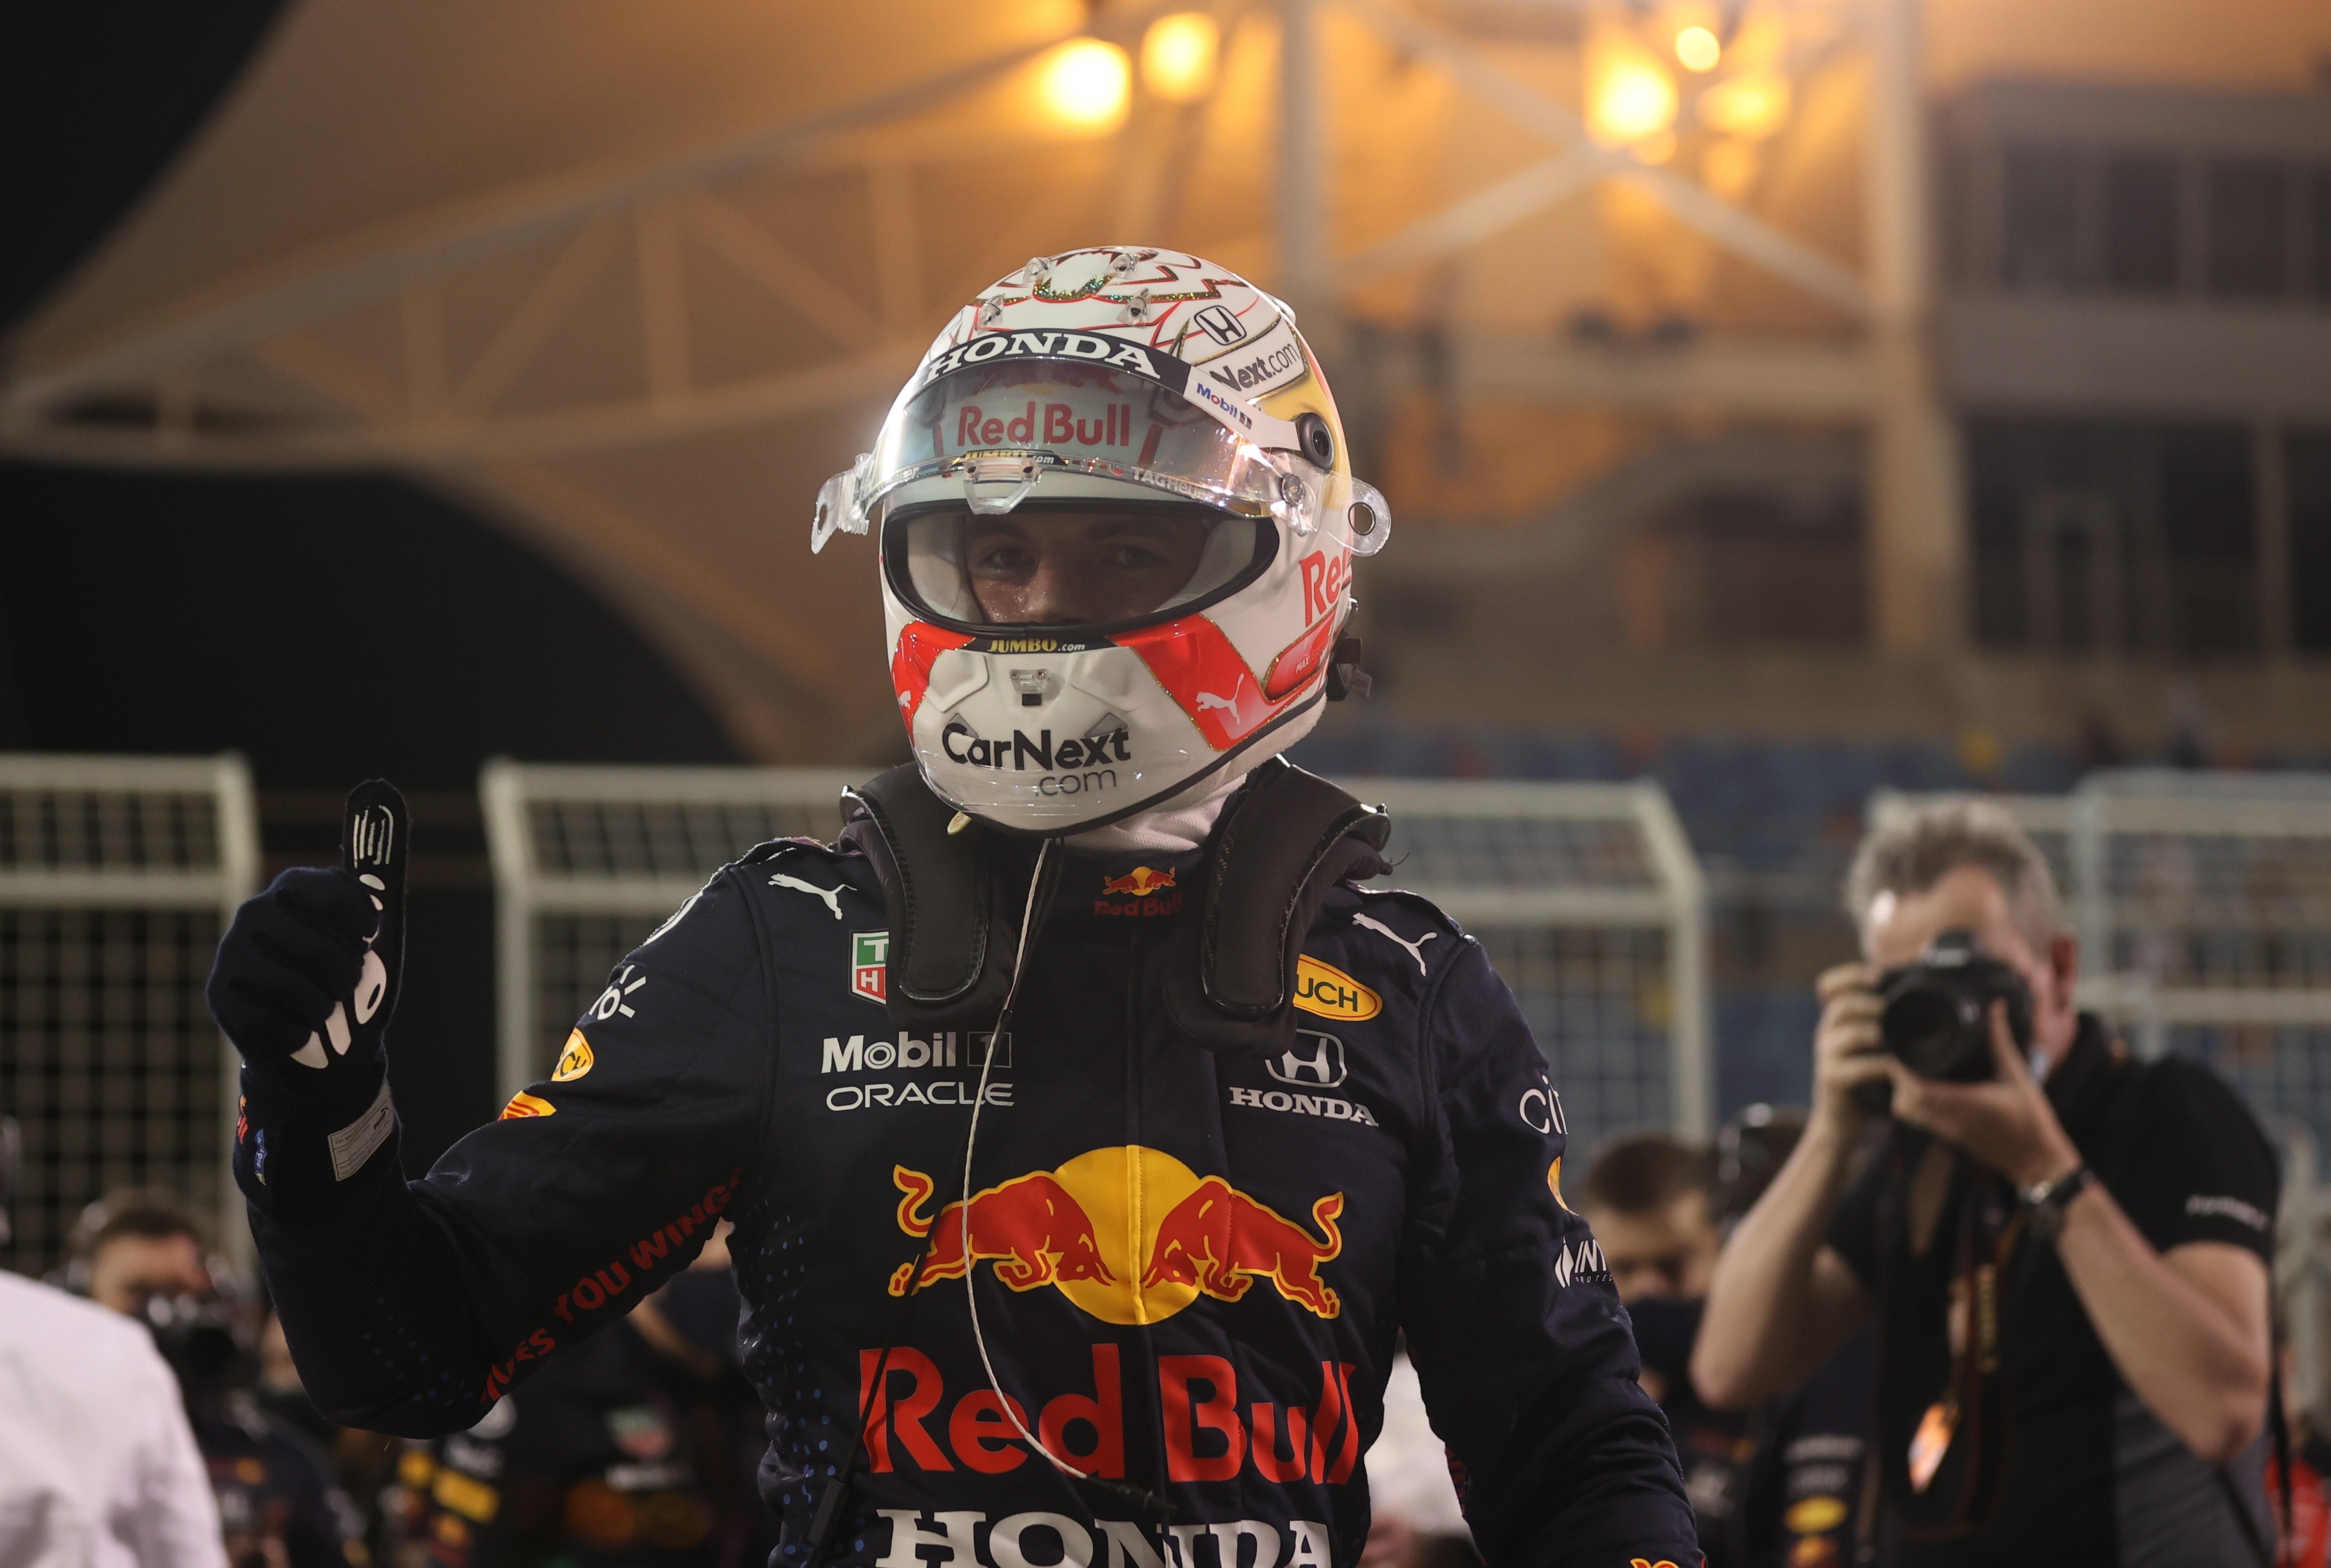 Fórmula 1: Verstappen se lleva la 'pole' en Bahrein, Sainz 8º y Alonso 9º